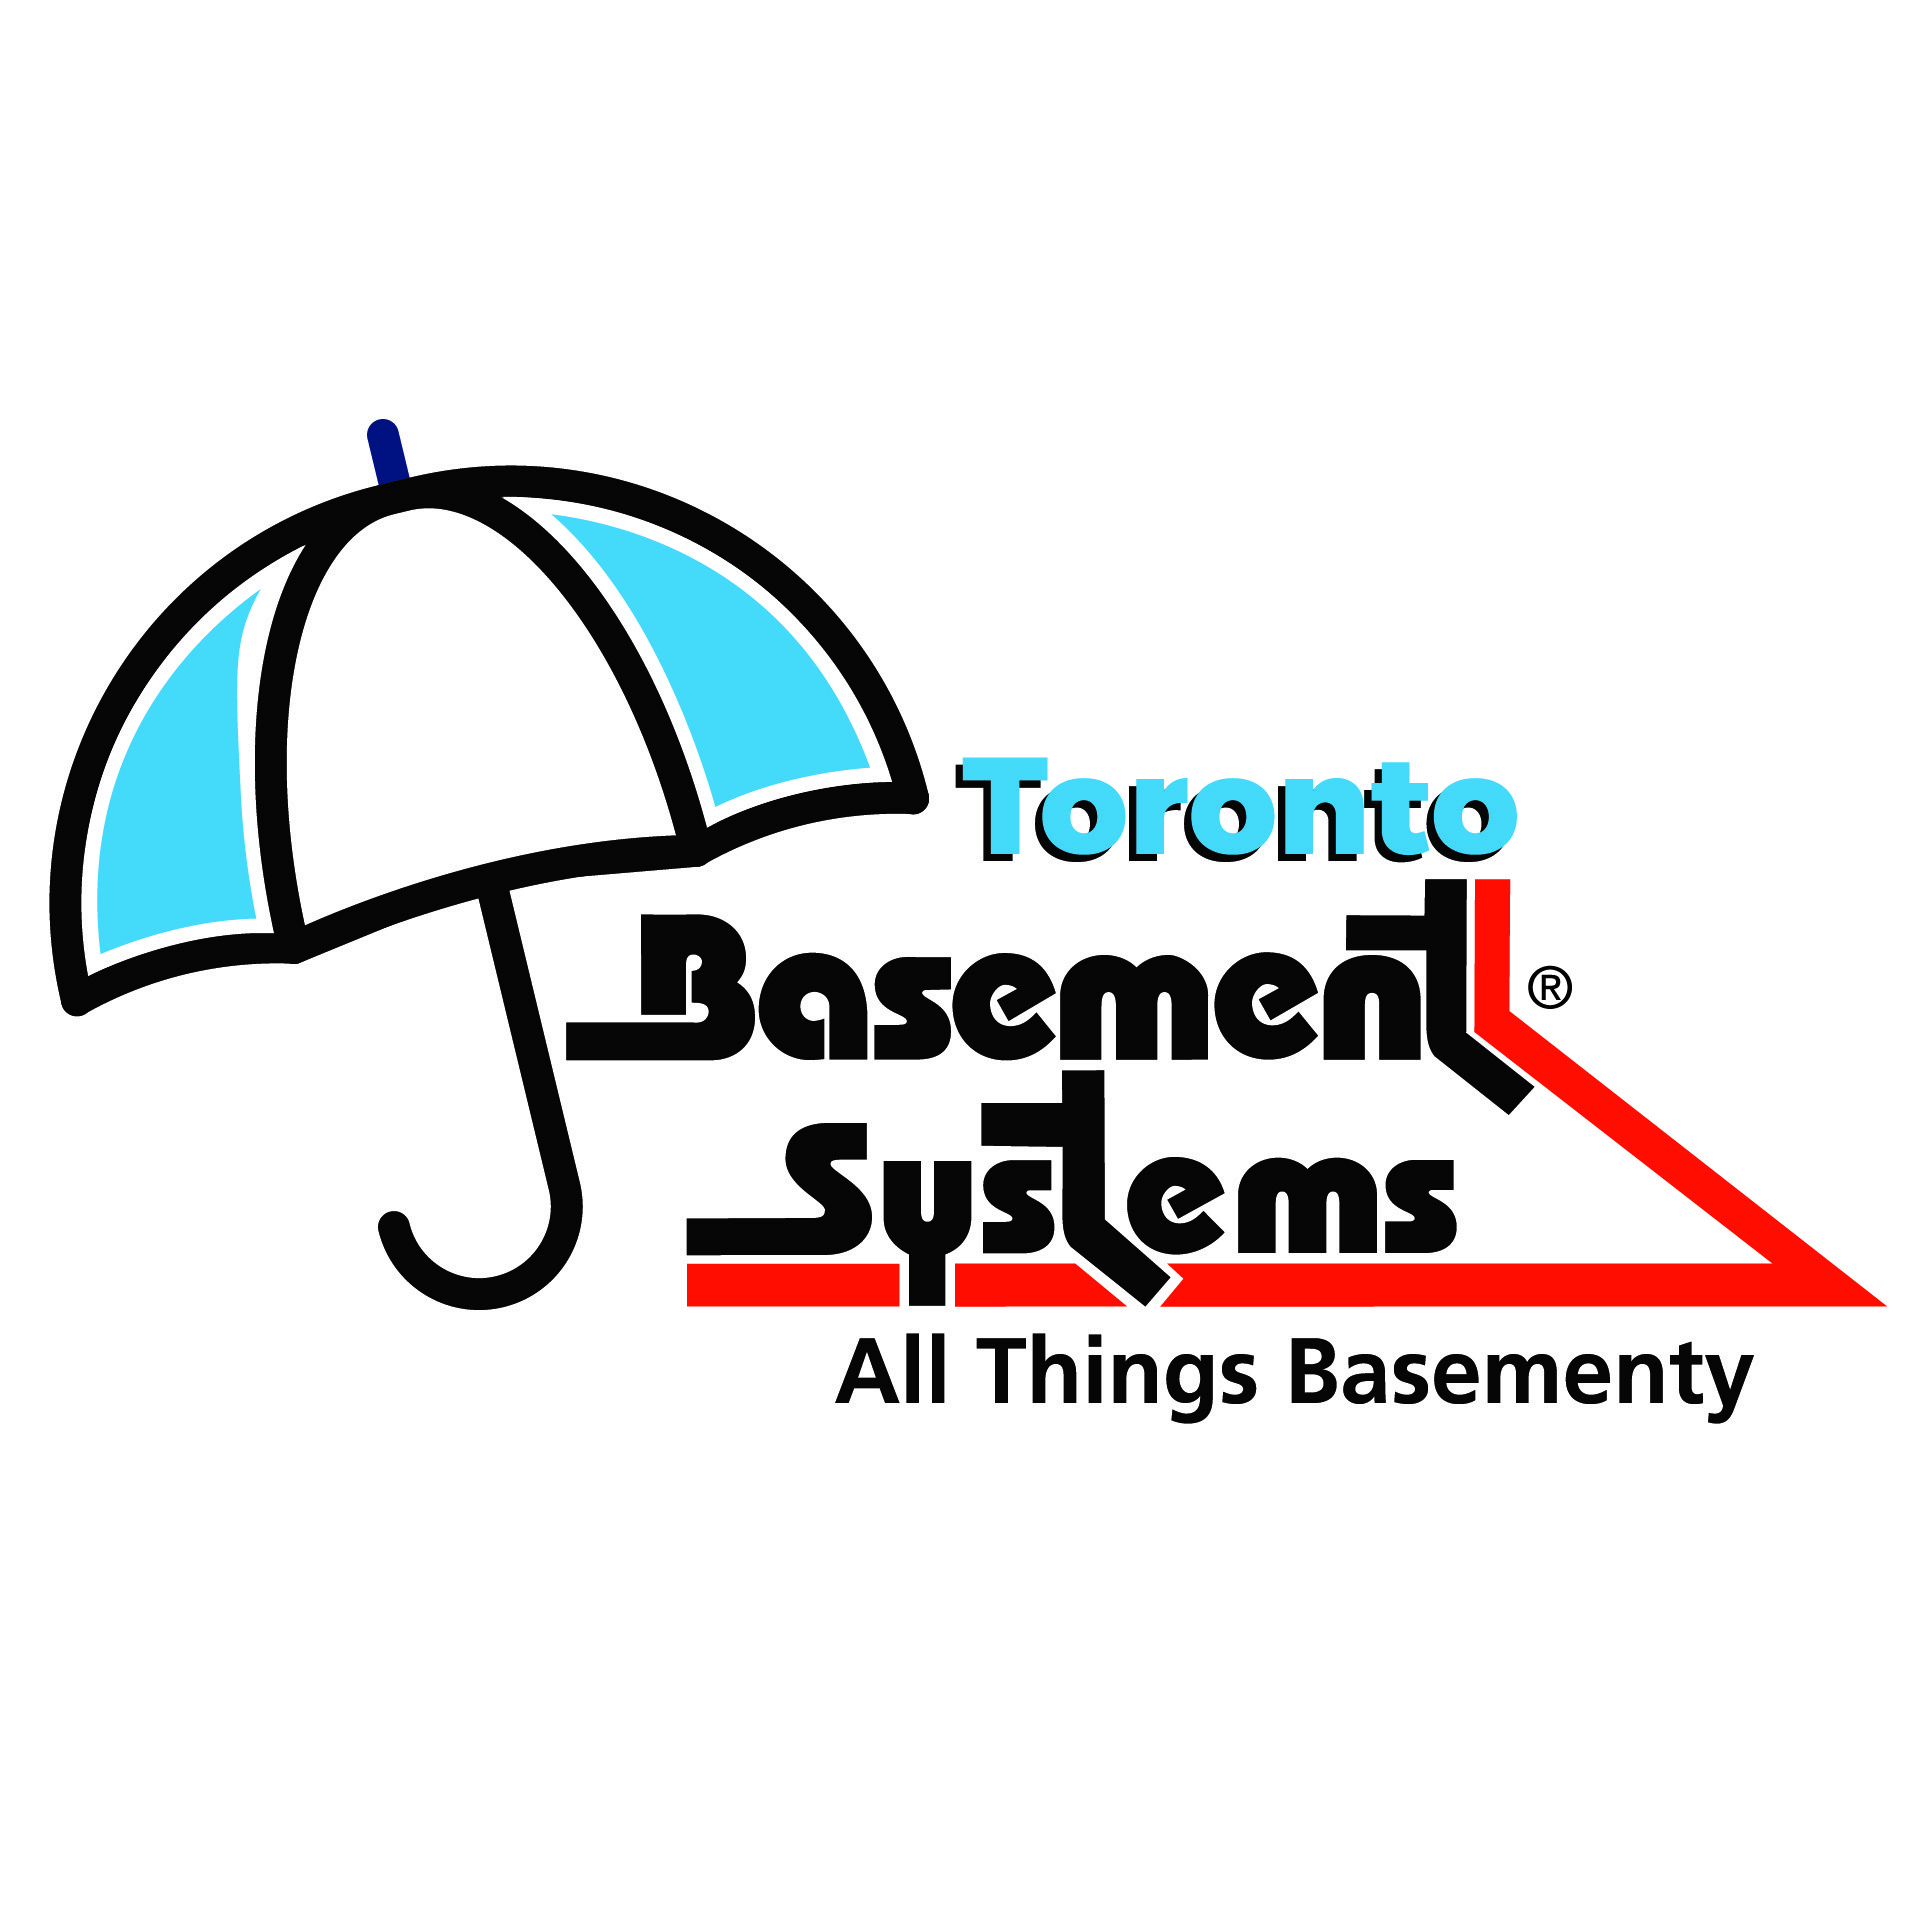 Basement Systems Toronto's logo